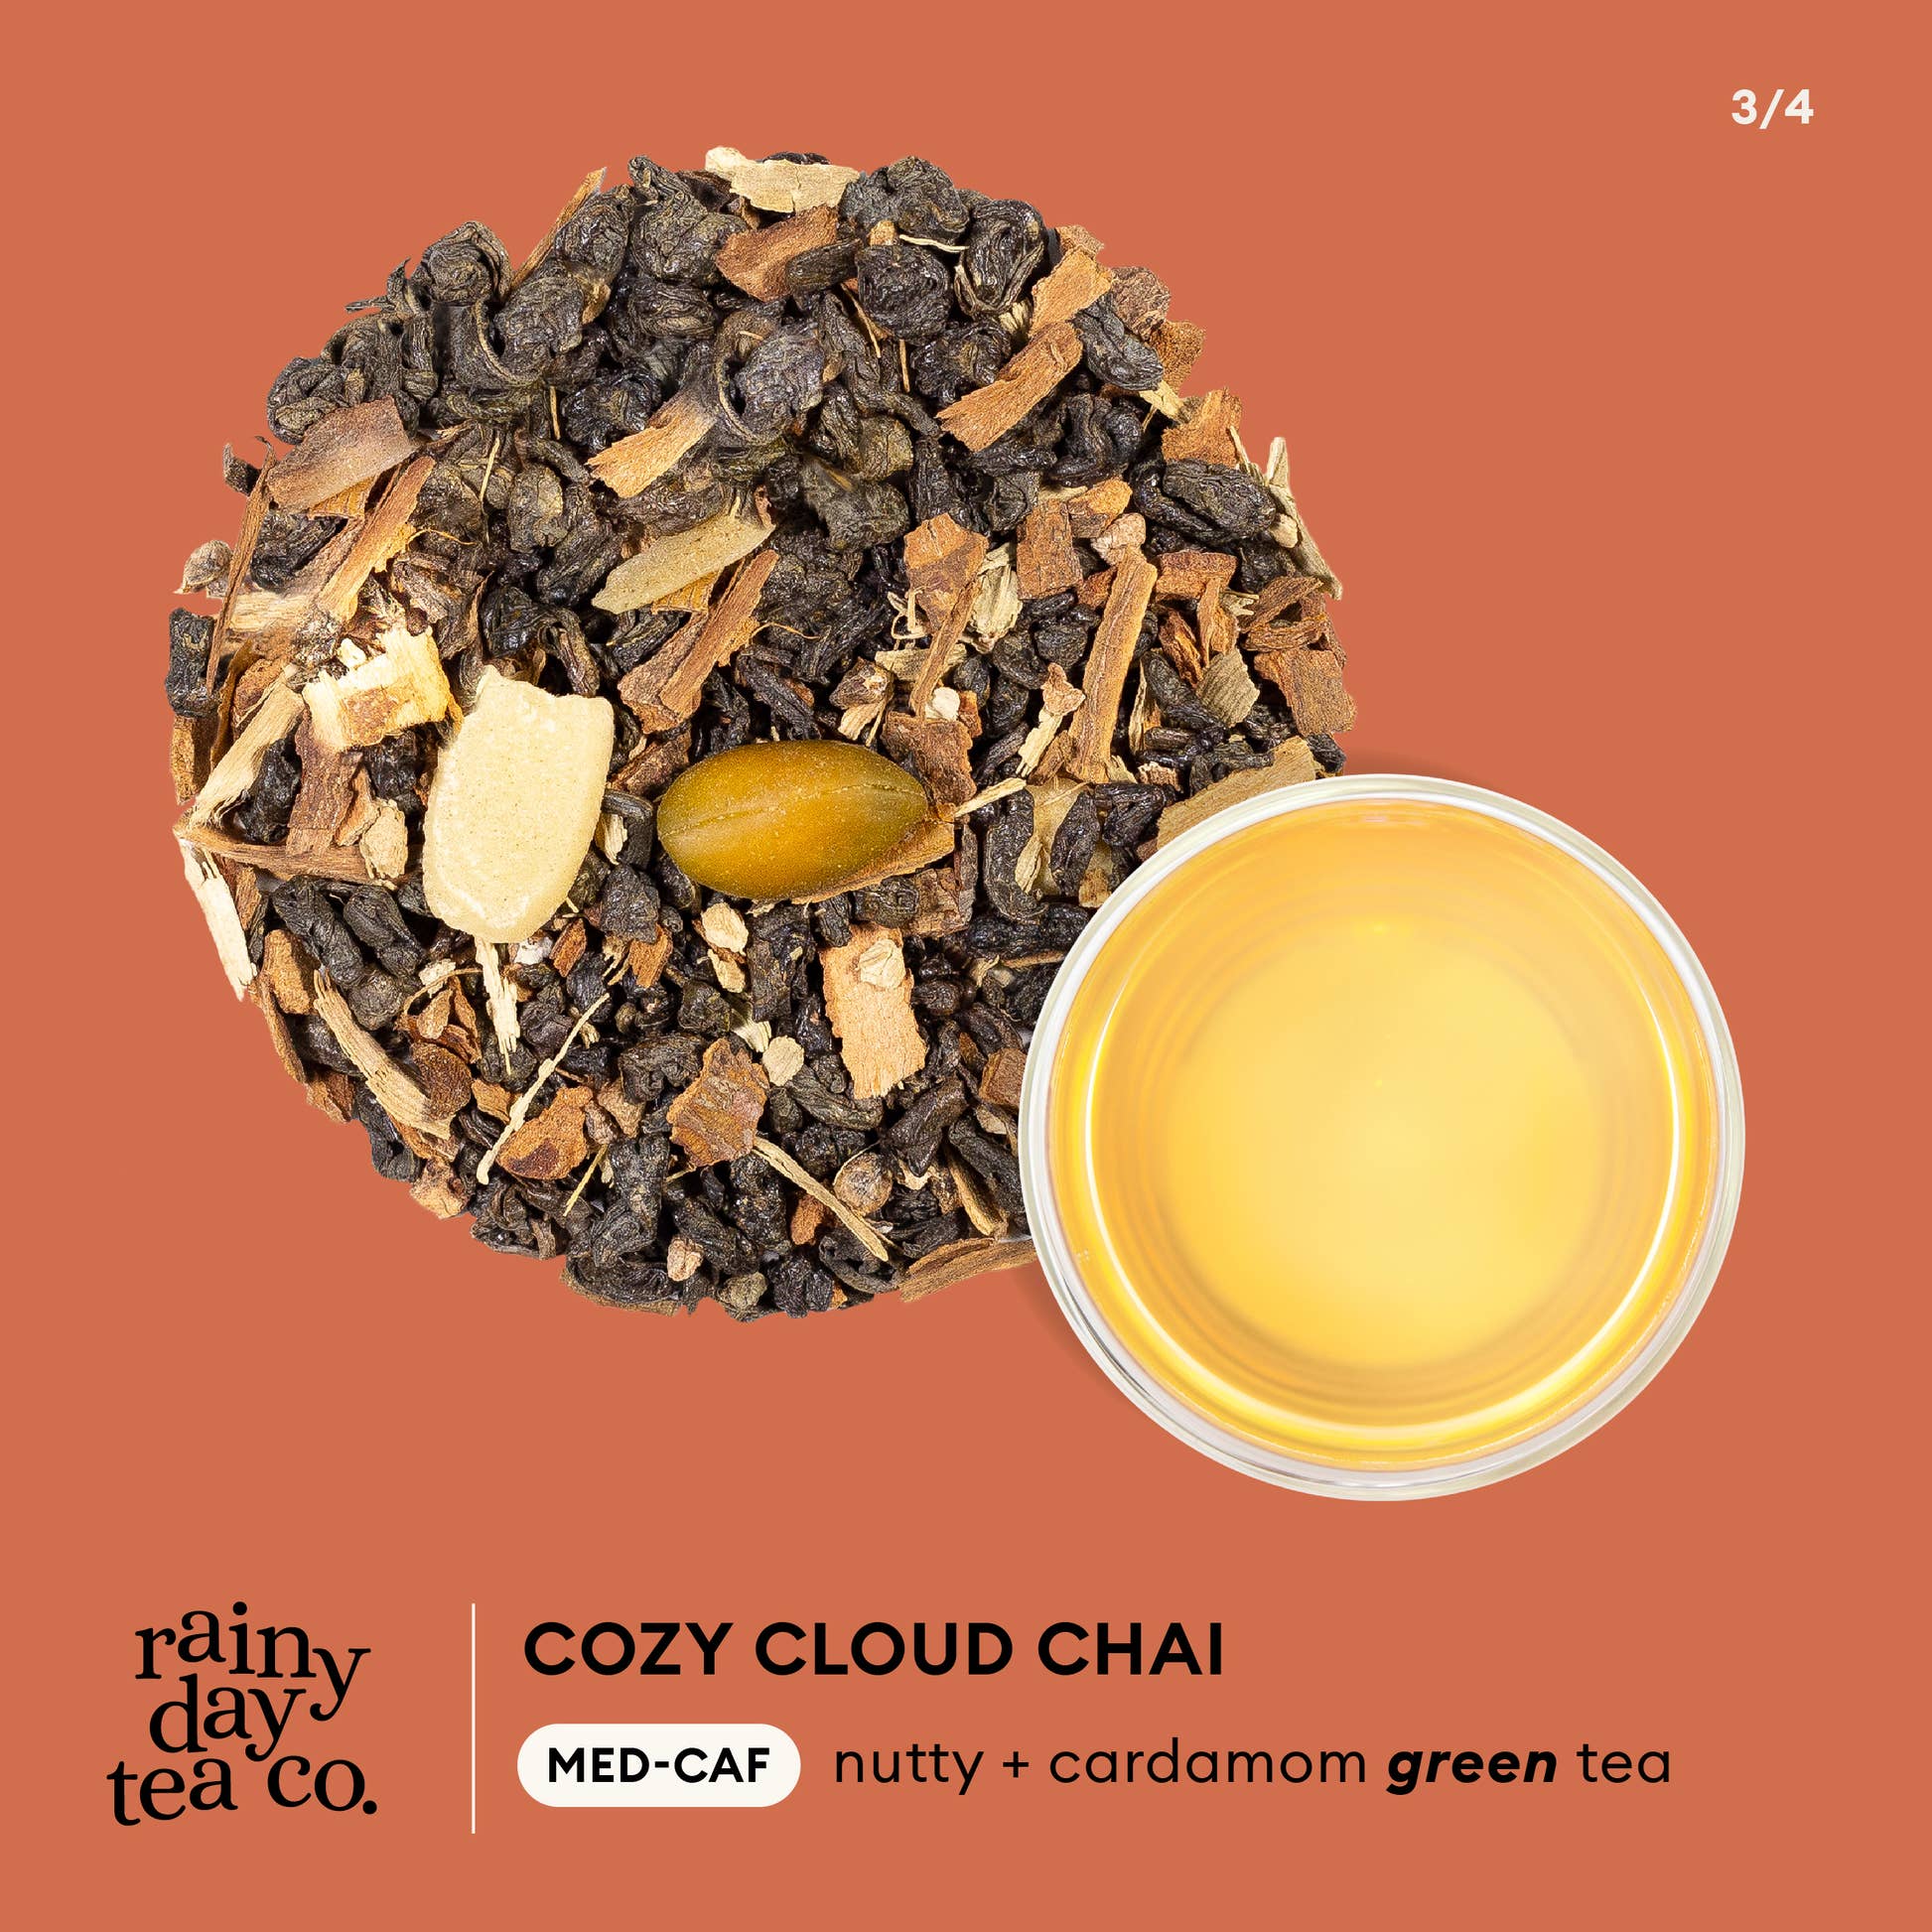 Rainy Day Tea Co - Cozy Cloud Chai med-caf, nutty + cardamom green tea infographic